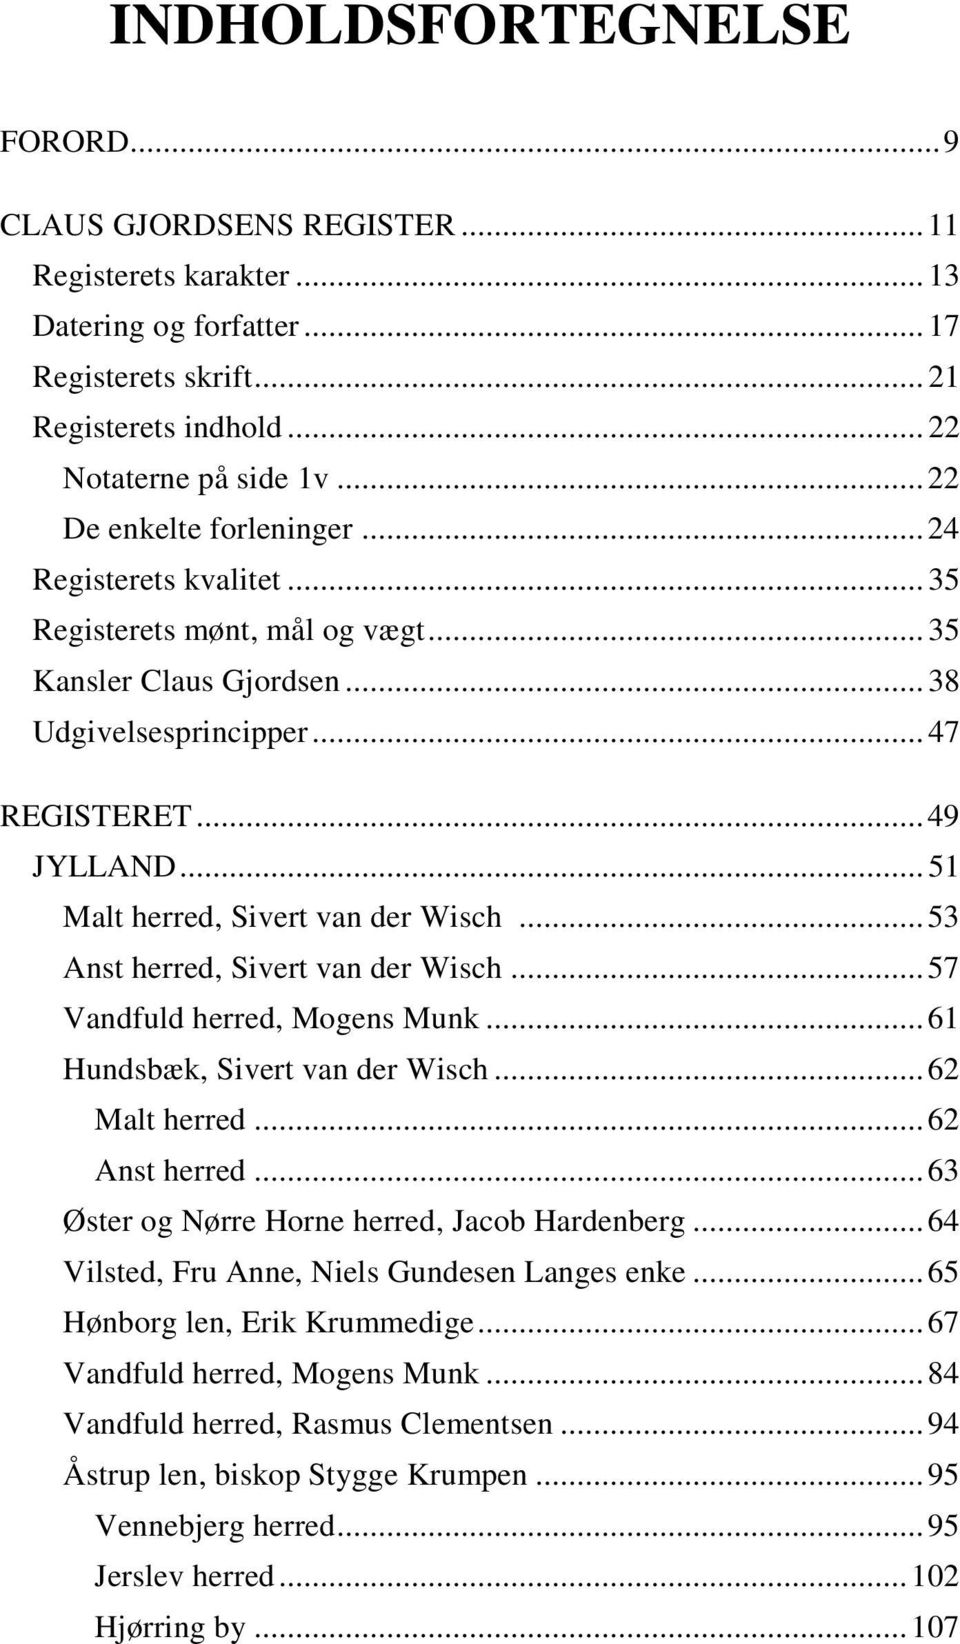 .. 51 Malt herred, Sivert van der Wisch... 53 Anst herred, Sivert van der Wisch... 57 Vandfuld herred, Mogens Munk... 61 Hundsbæk, Sivert van der Wisch... 62 Malt herred... 62 Anst herred.